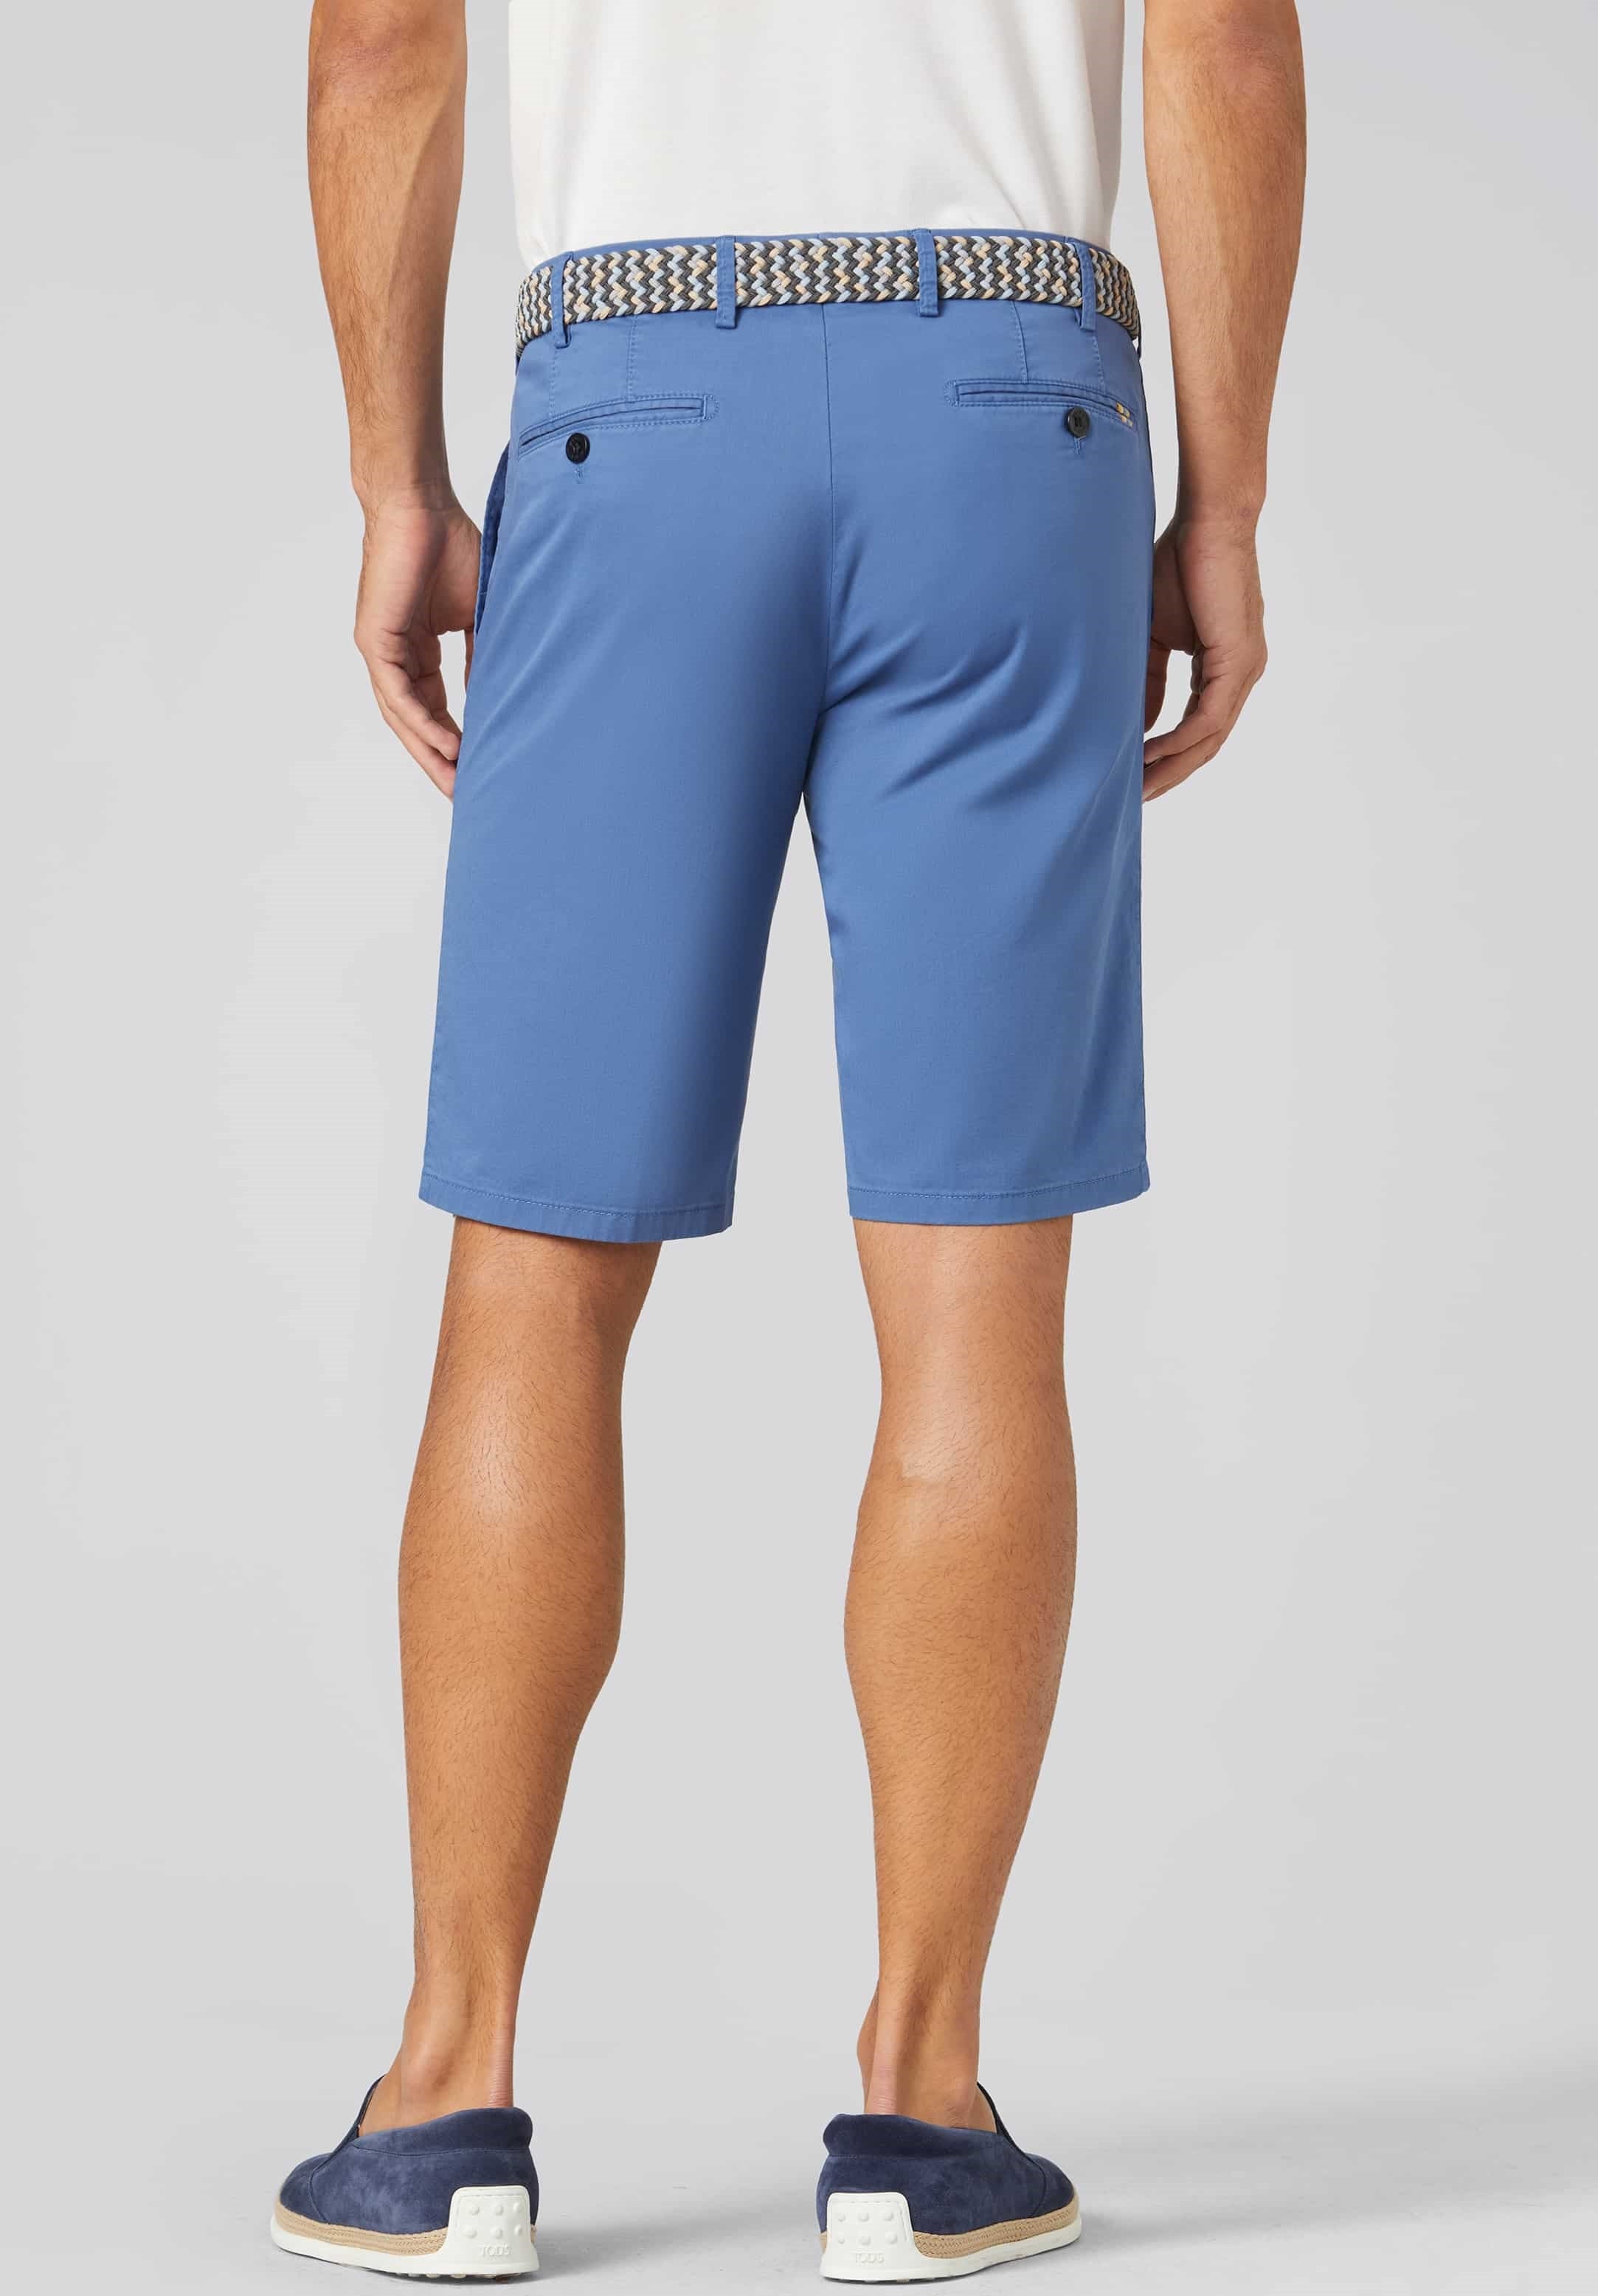 MEYER B-Palma Shorts - Men's Cotton Twill - Blue